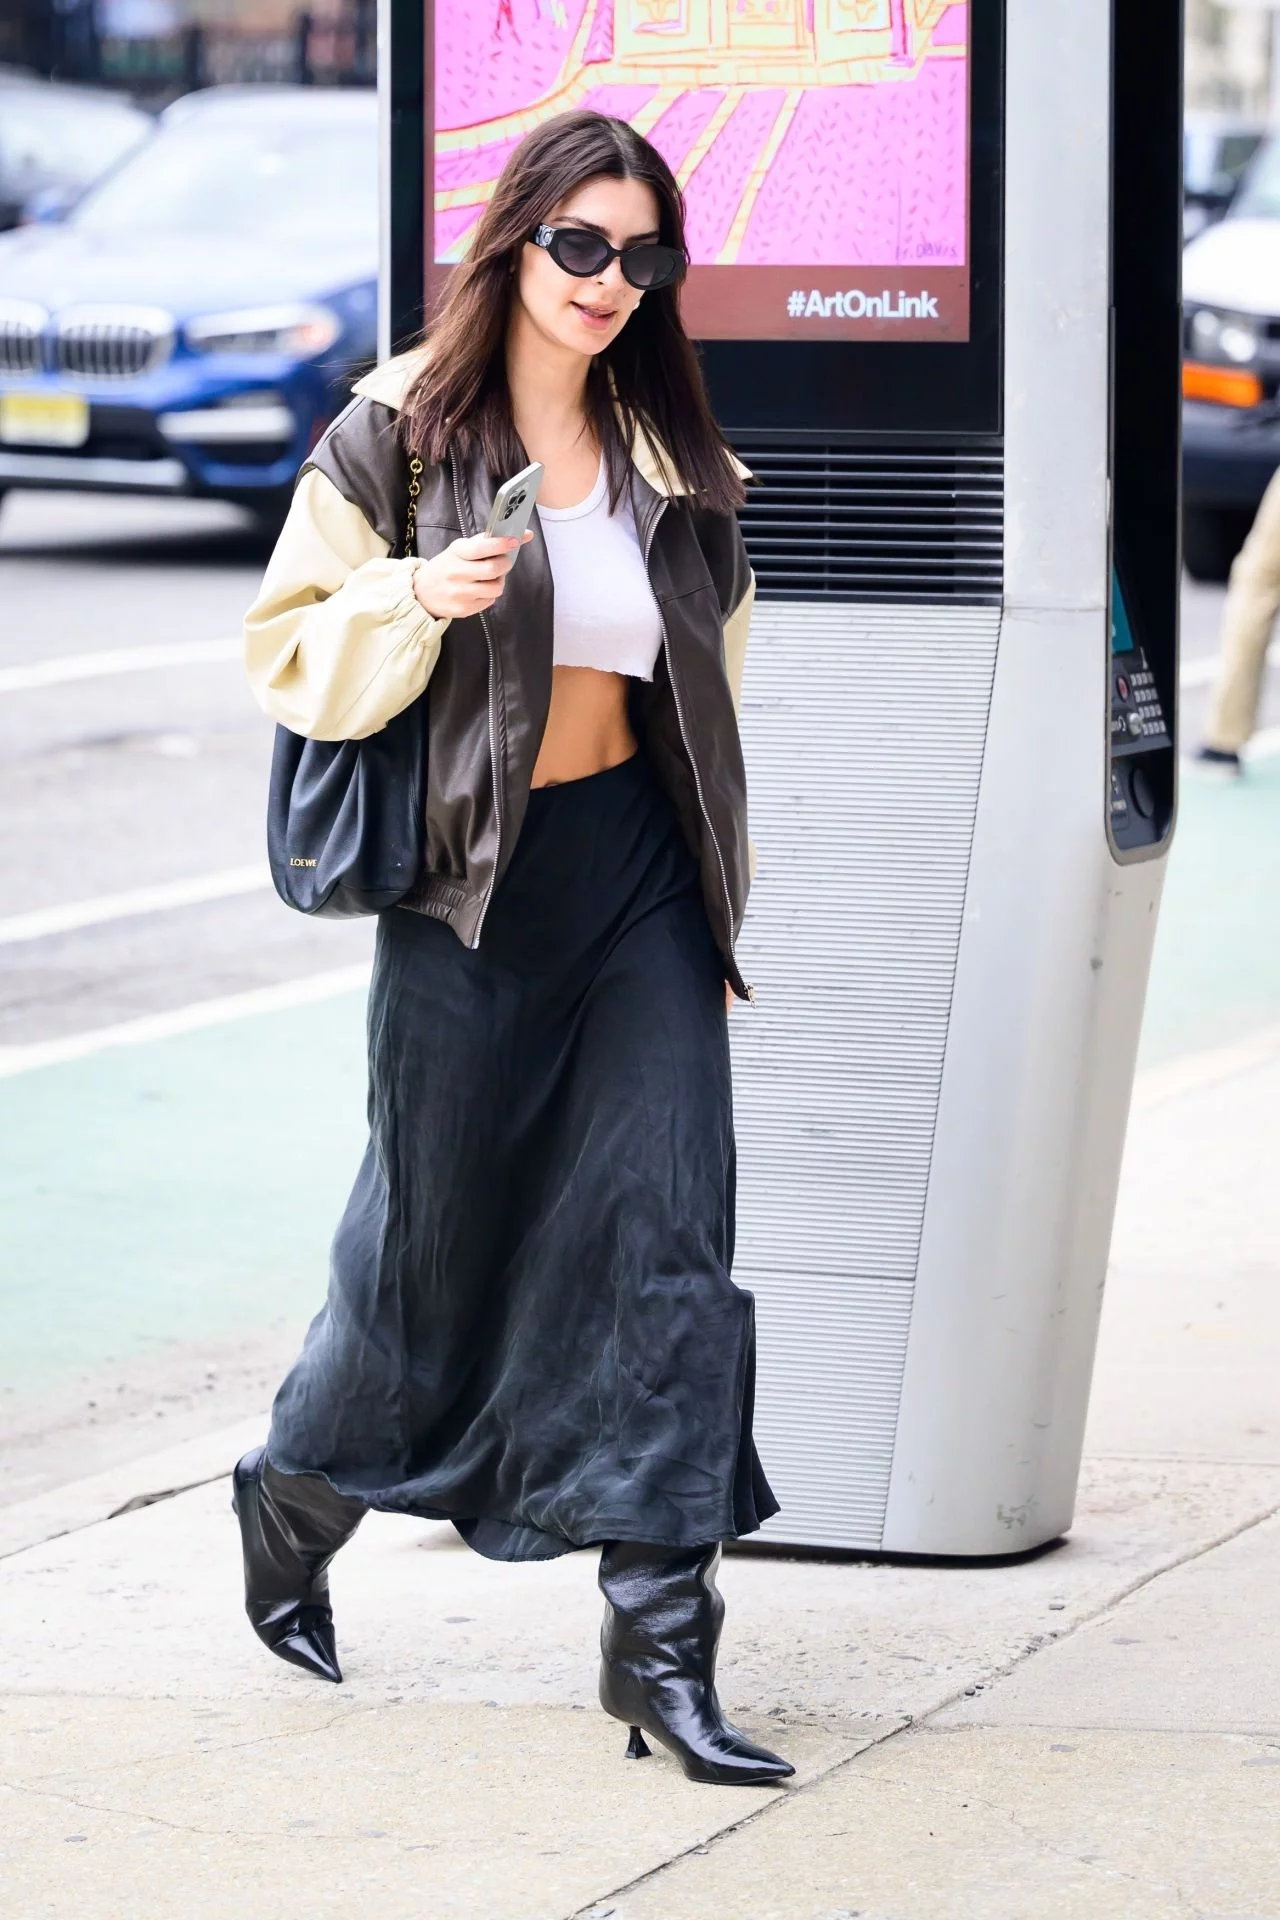 How can I emulate Emily Ratajkowski's effortlessly elegant street chic in NYC?